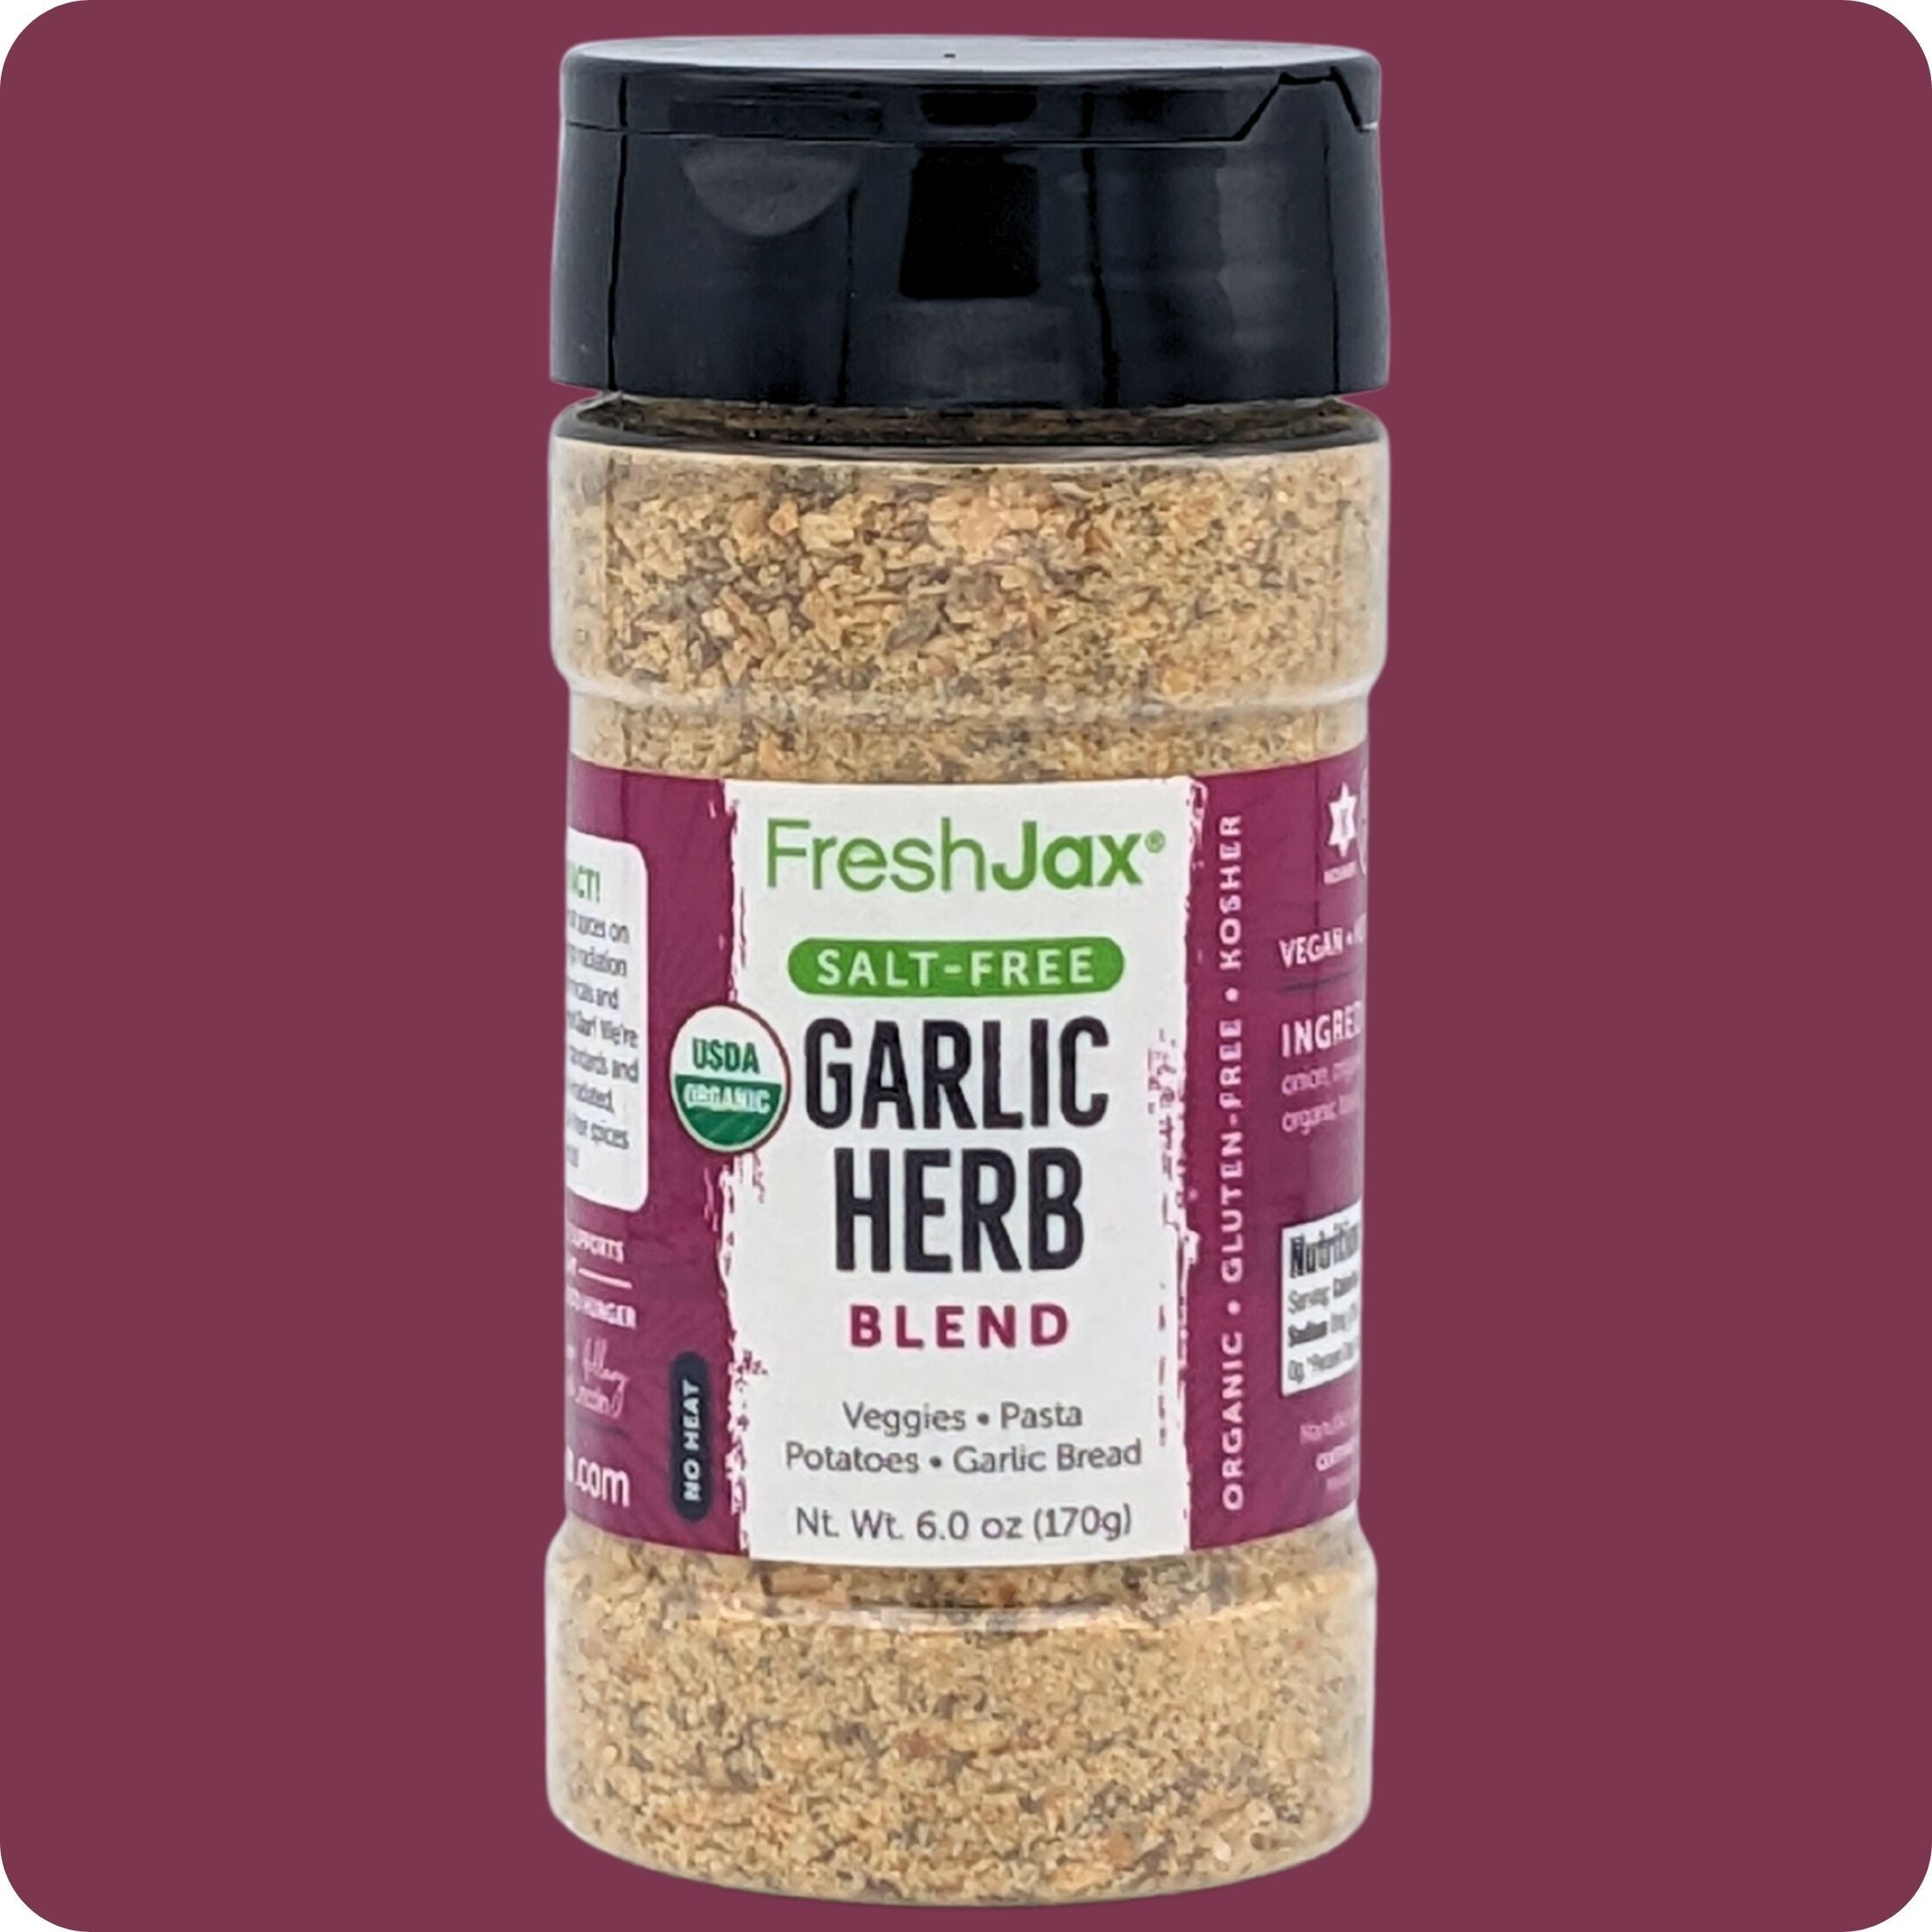 Garlic HERB: Organic Salt-Free Herb Blend Regular (1.5 oz)